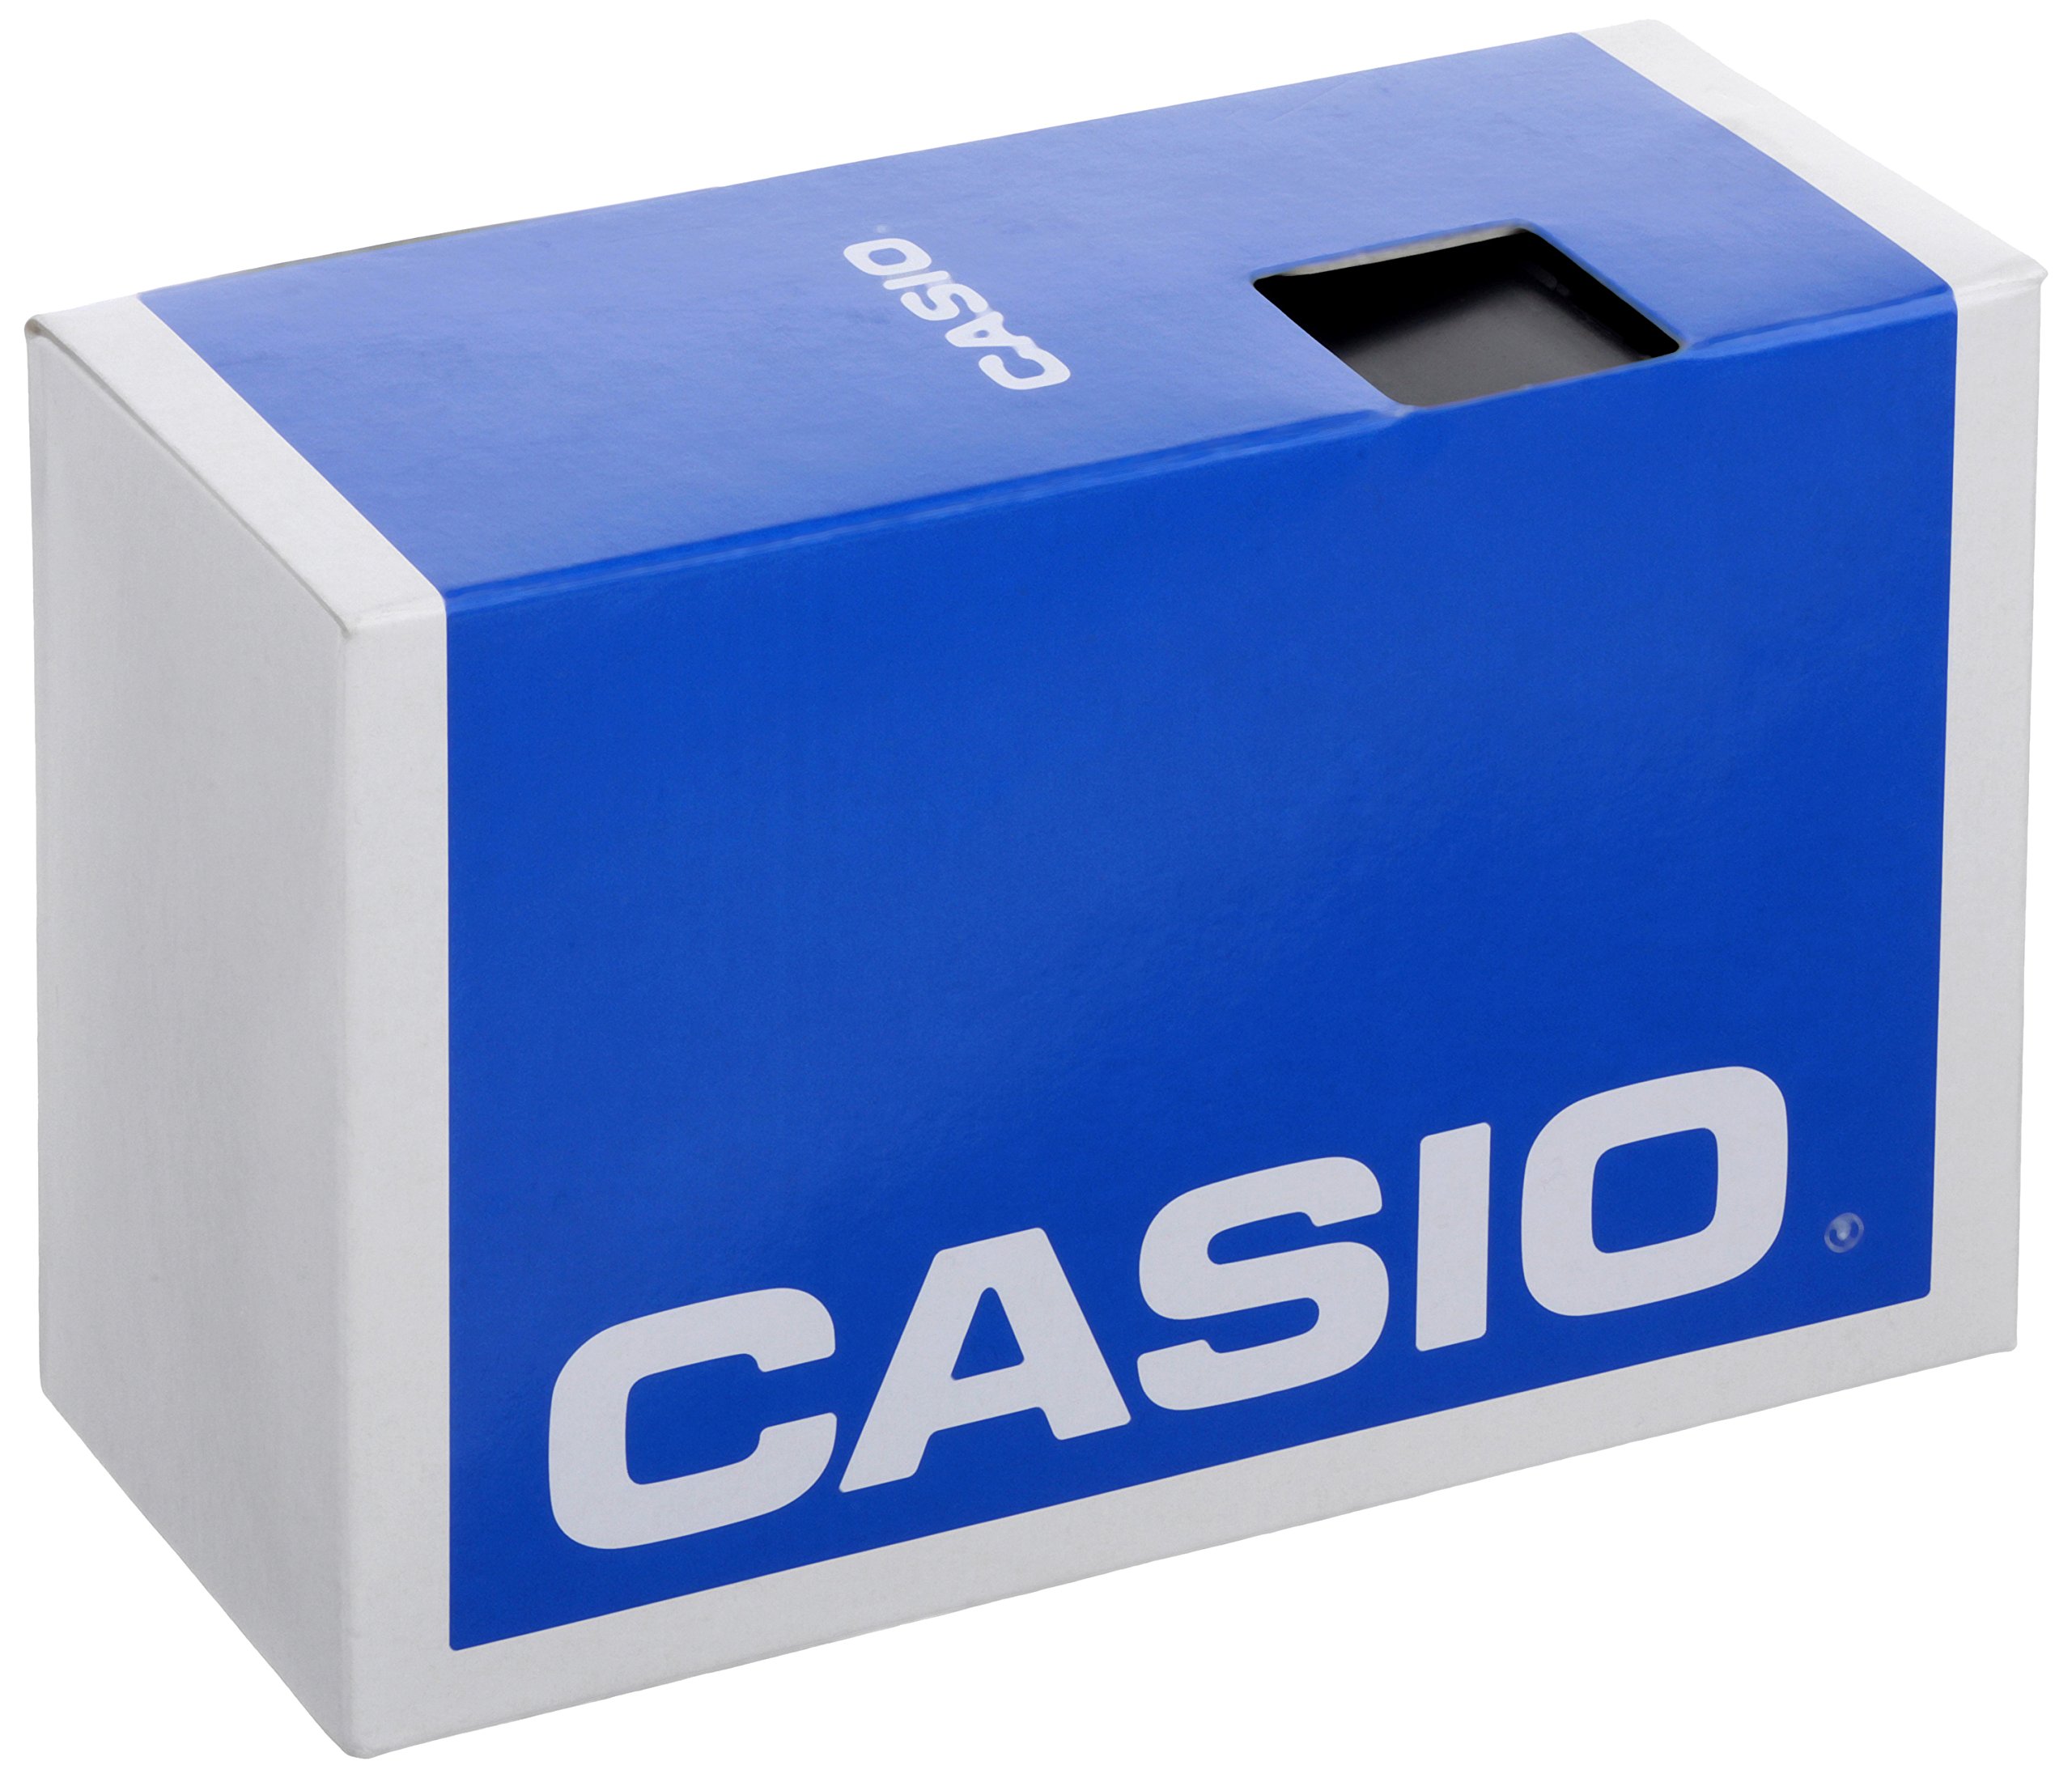 CASIO Men's HDA600B-1BV 10-Year Battery Sport Watch